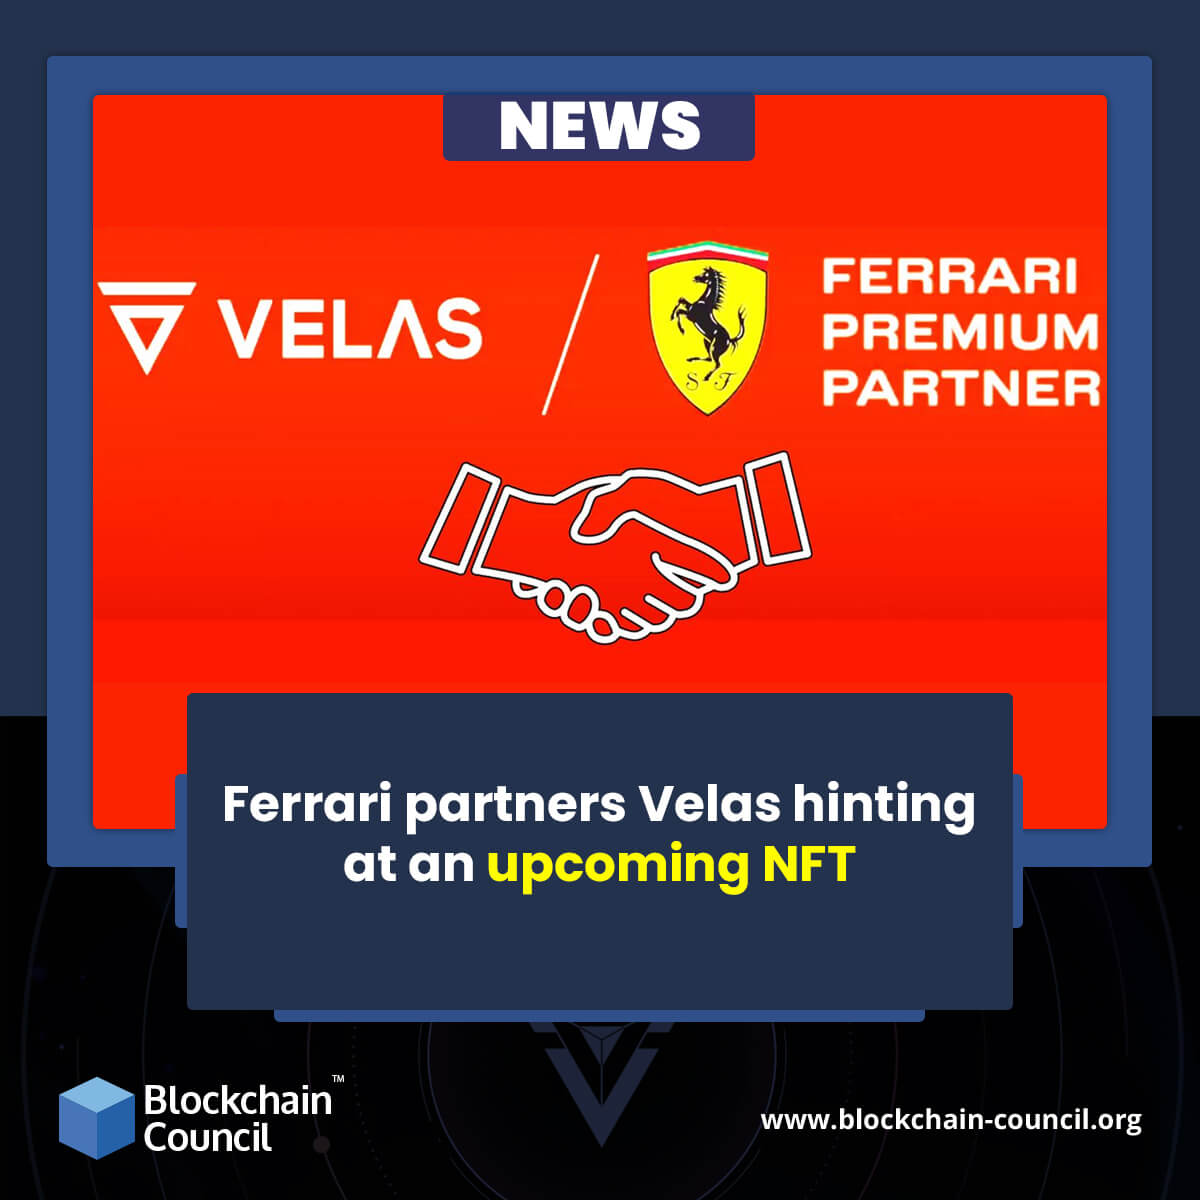 Ferrari partners Velas hinting at an upcoming NFT